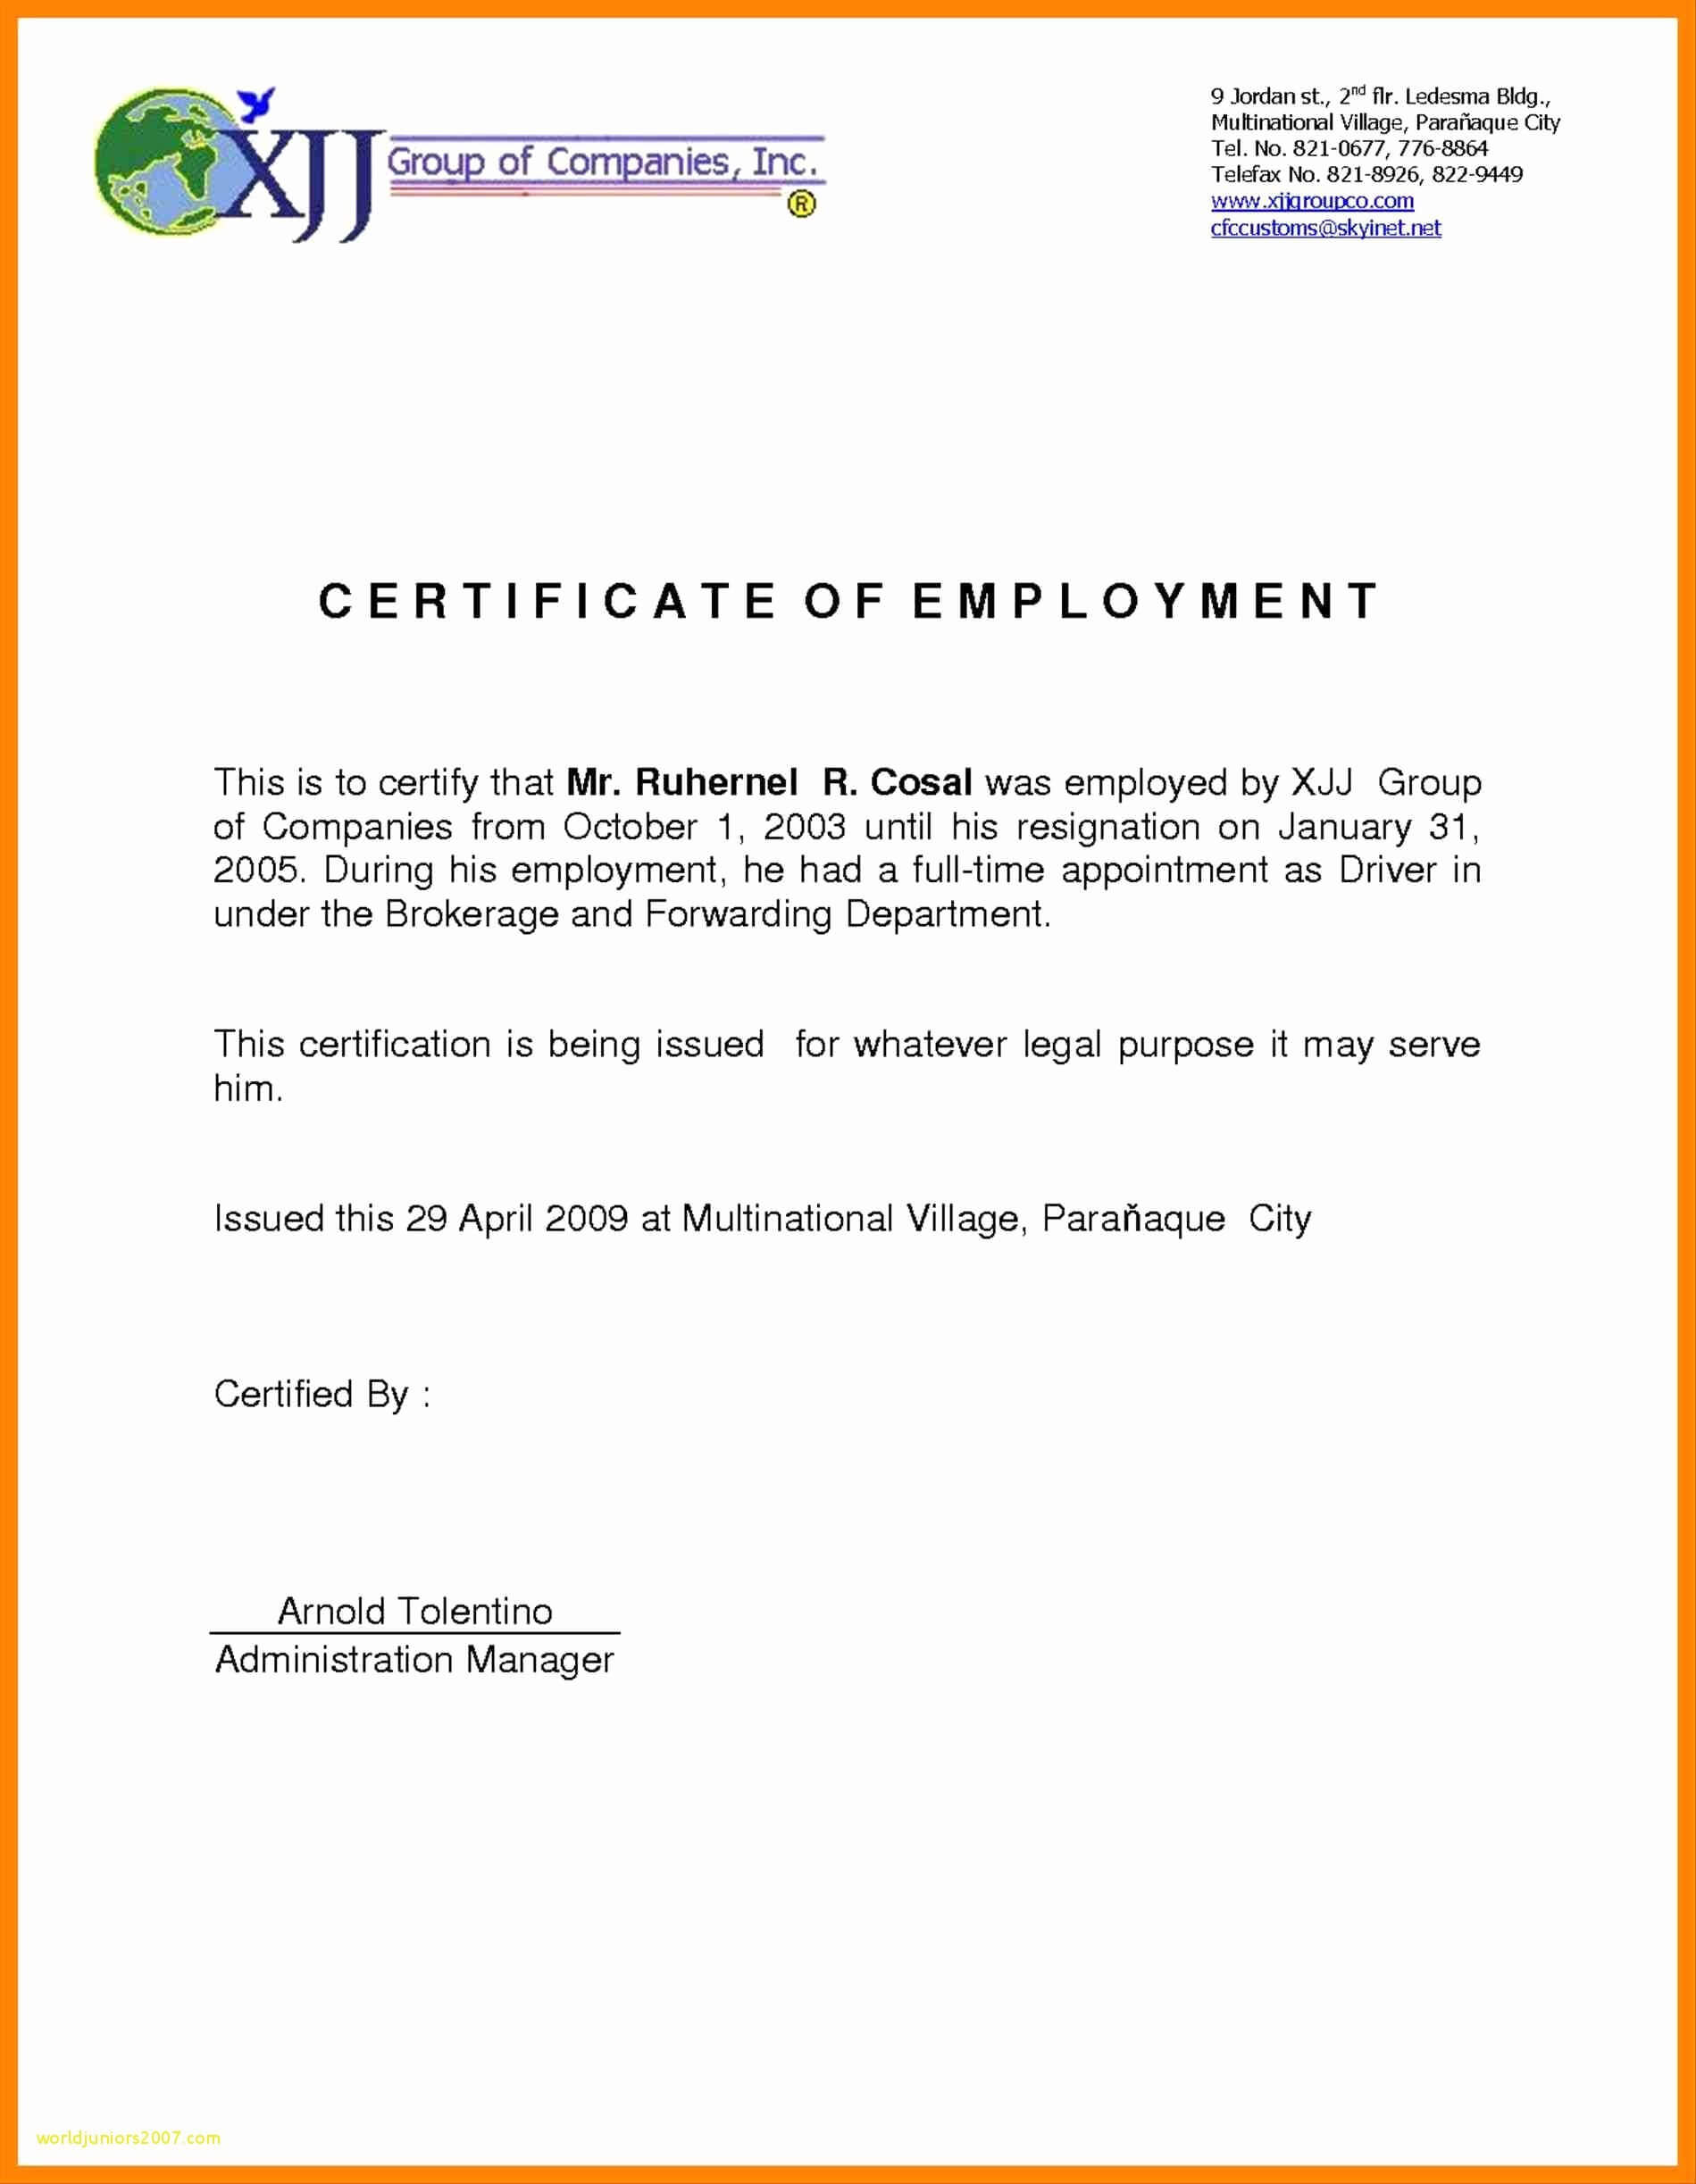 029 Certificate Of Employment Template Impressive Ideas Free With Template Of Certificate Of Employment